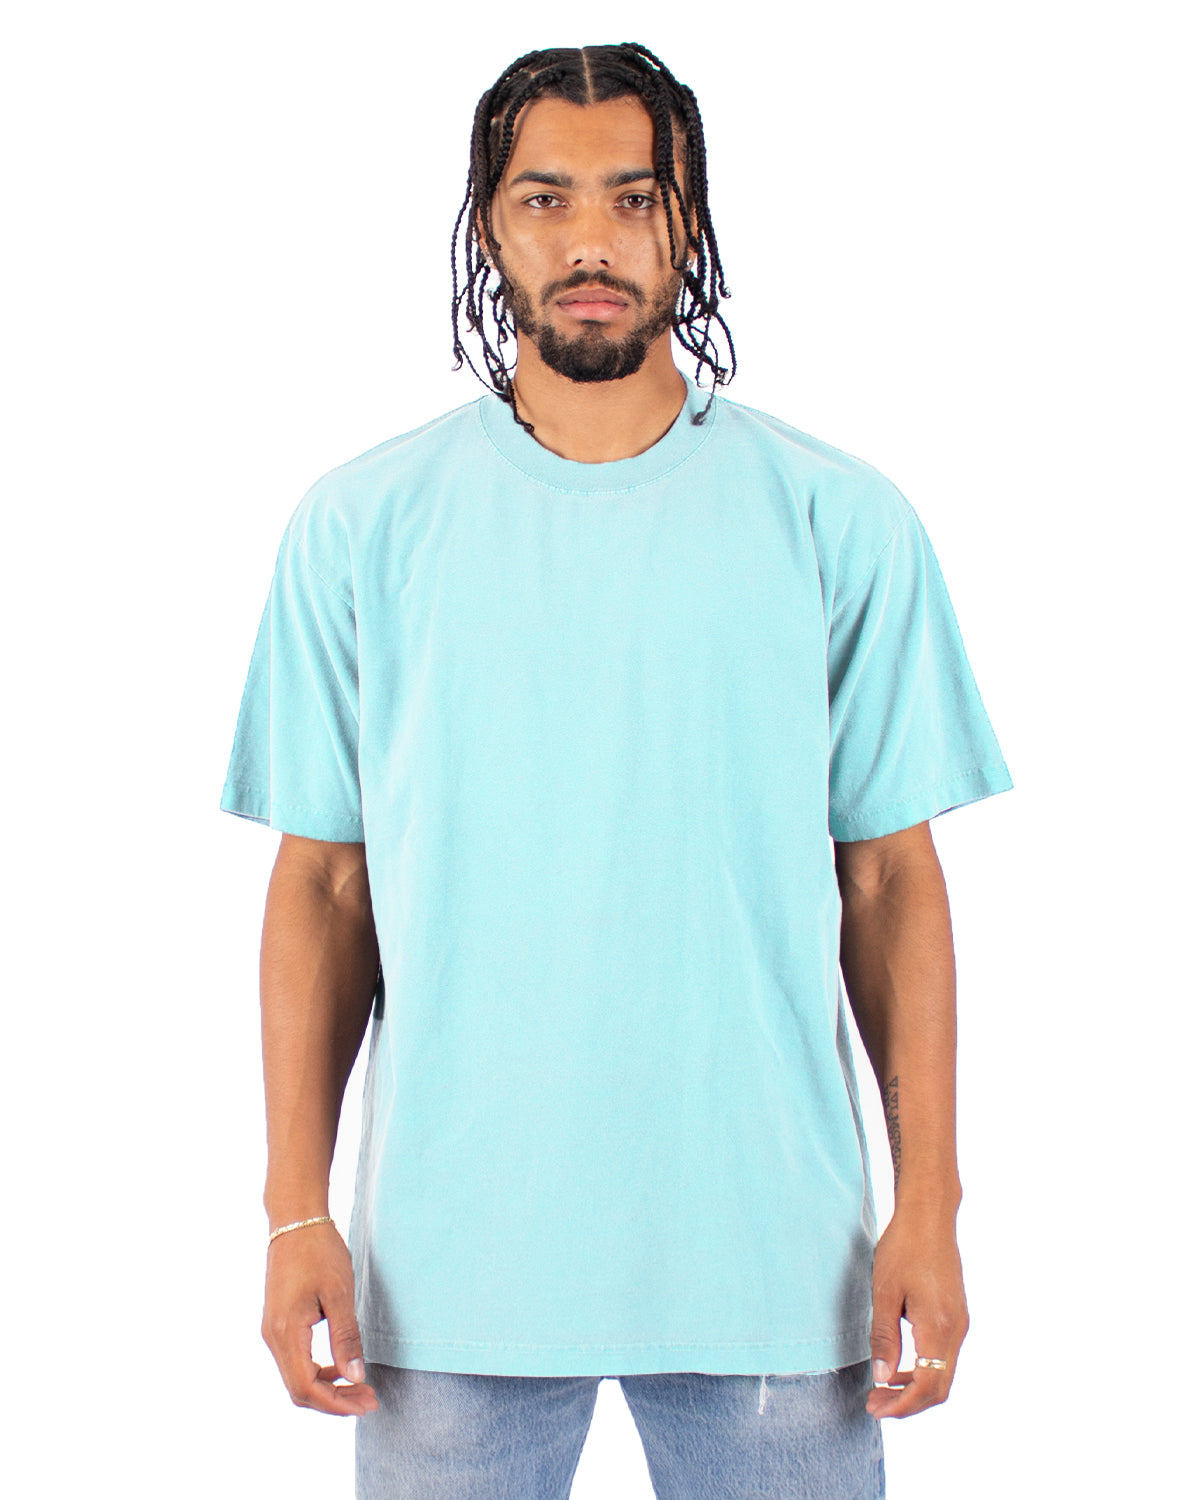 Max Heavyweight Garment Dye - Large Sizes 3XL / Powder Blue